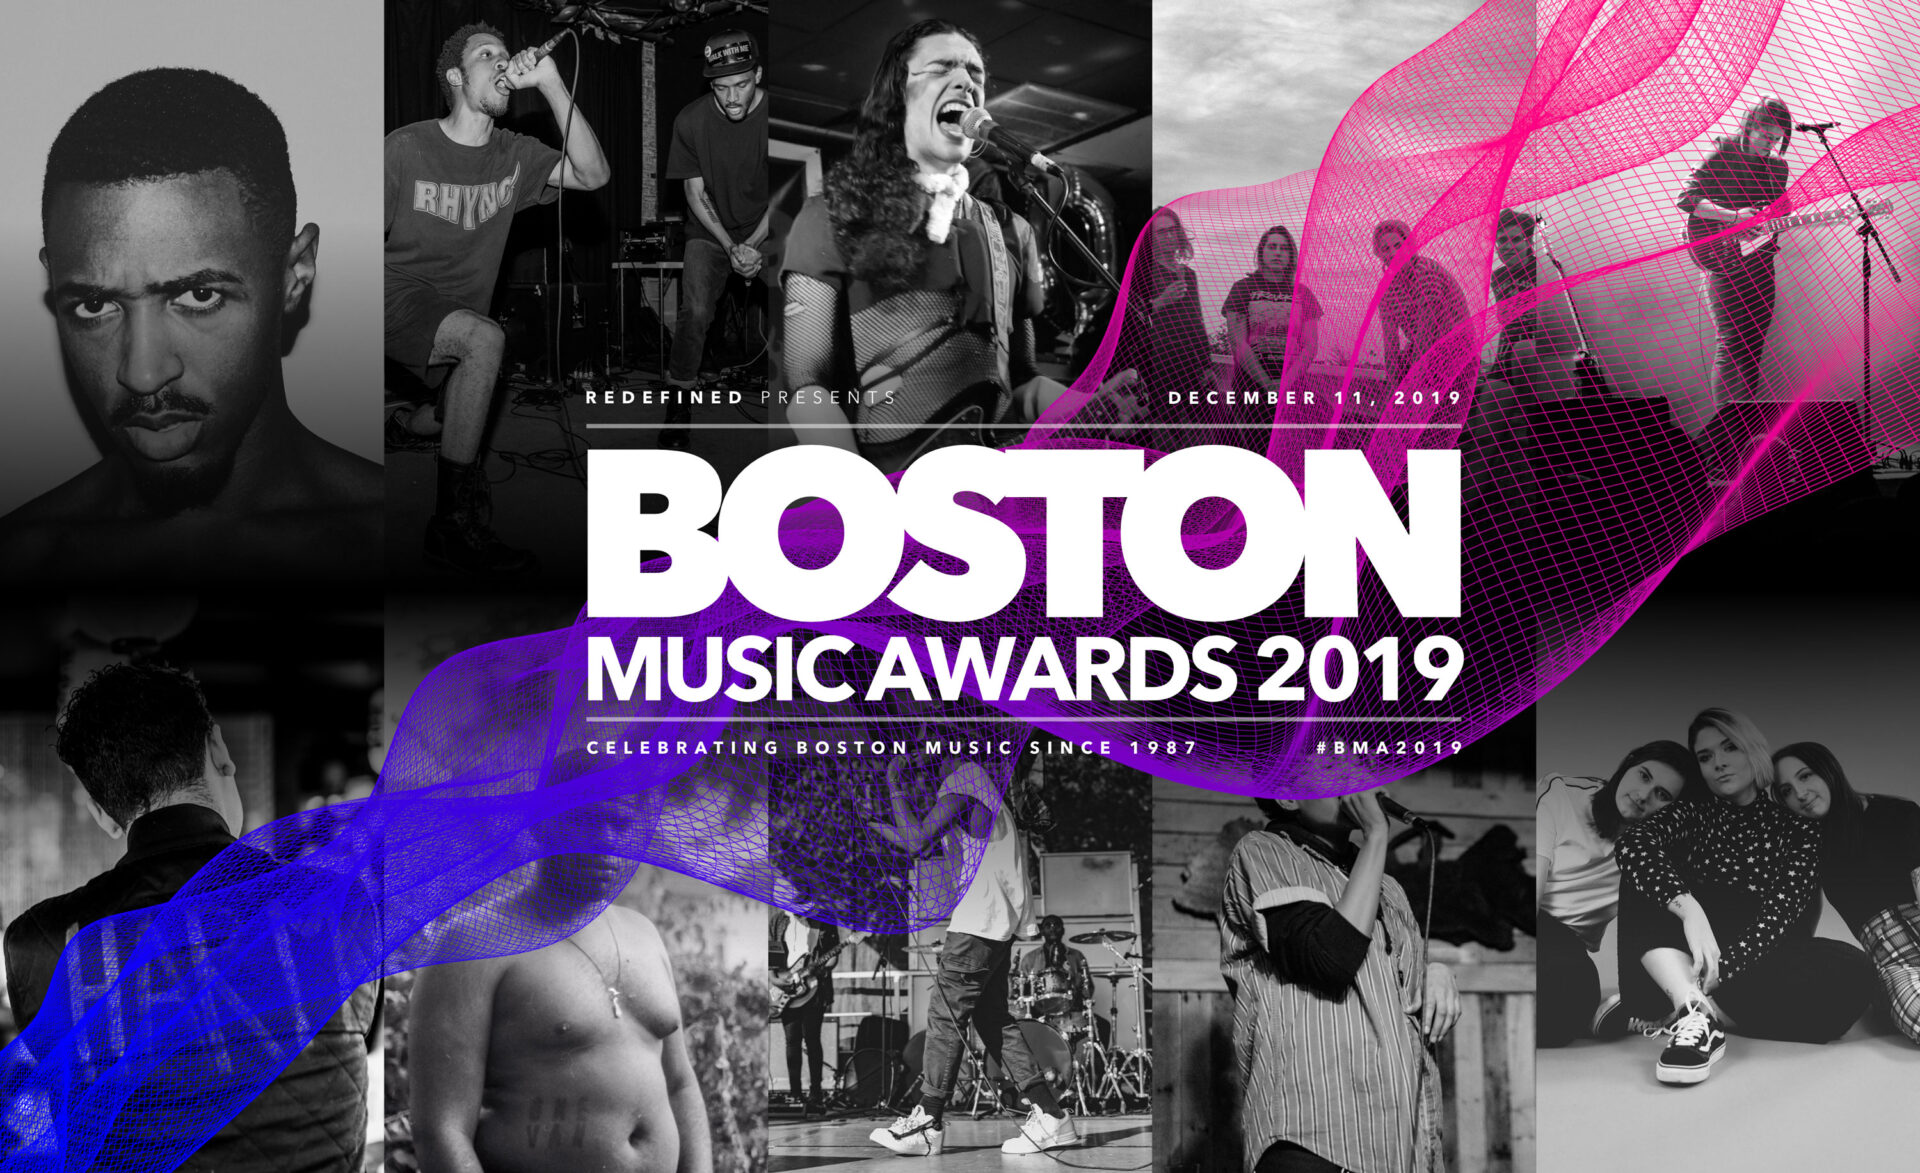 New Artist of the Year Boston Music Awards